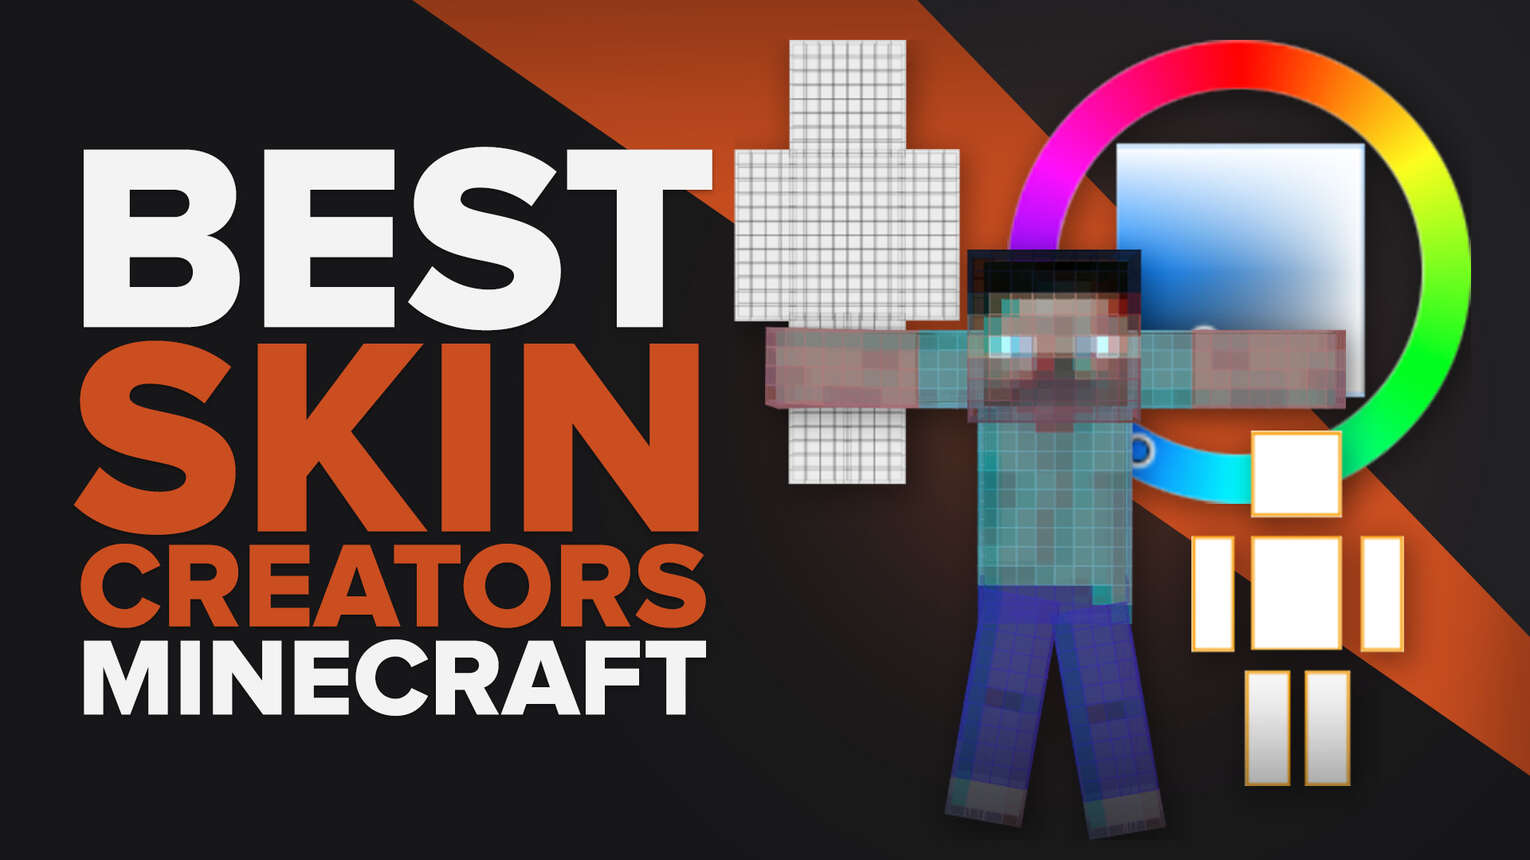 Top 3 Minecraft Skin Editors 